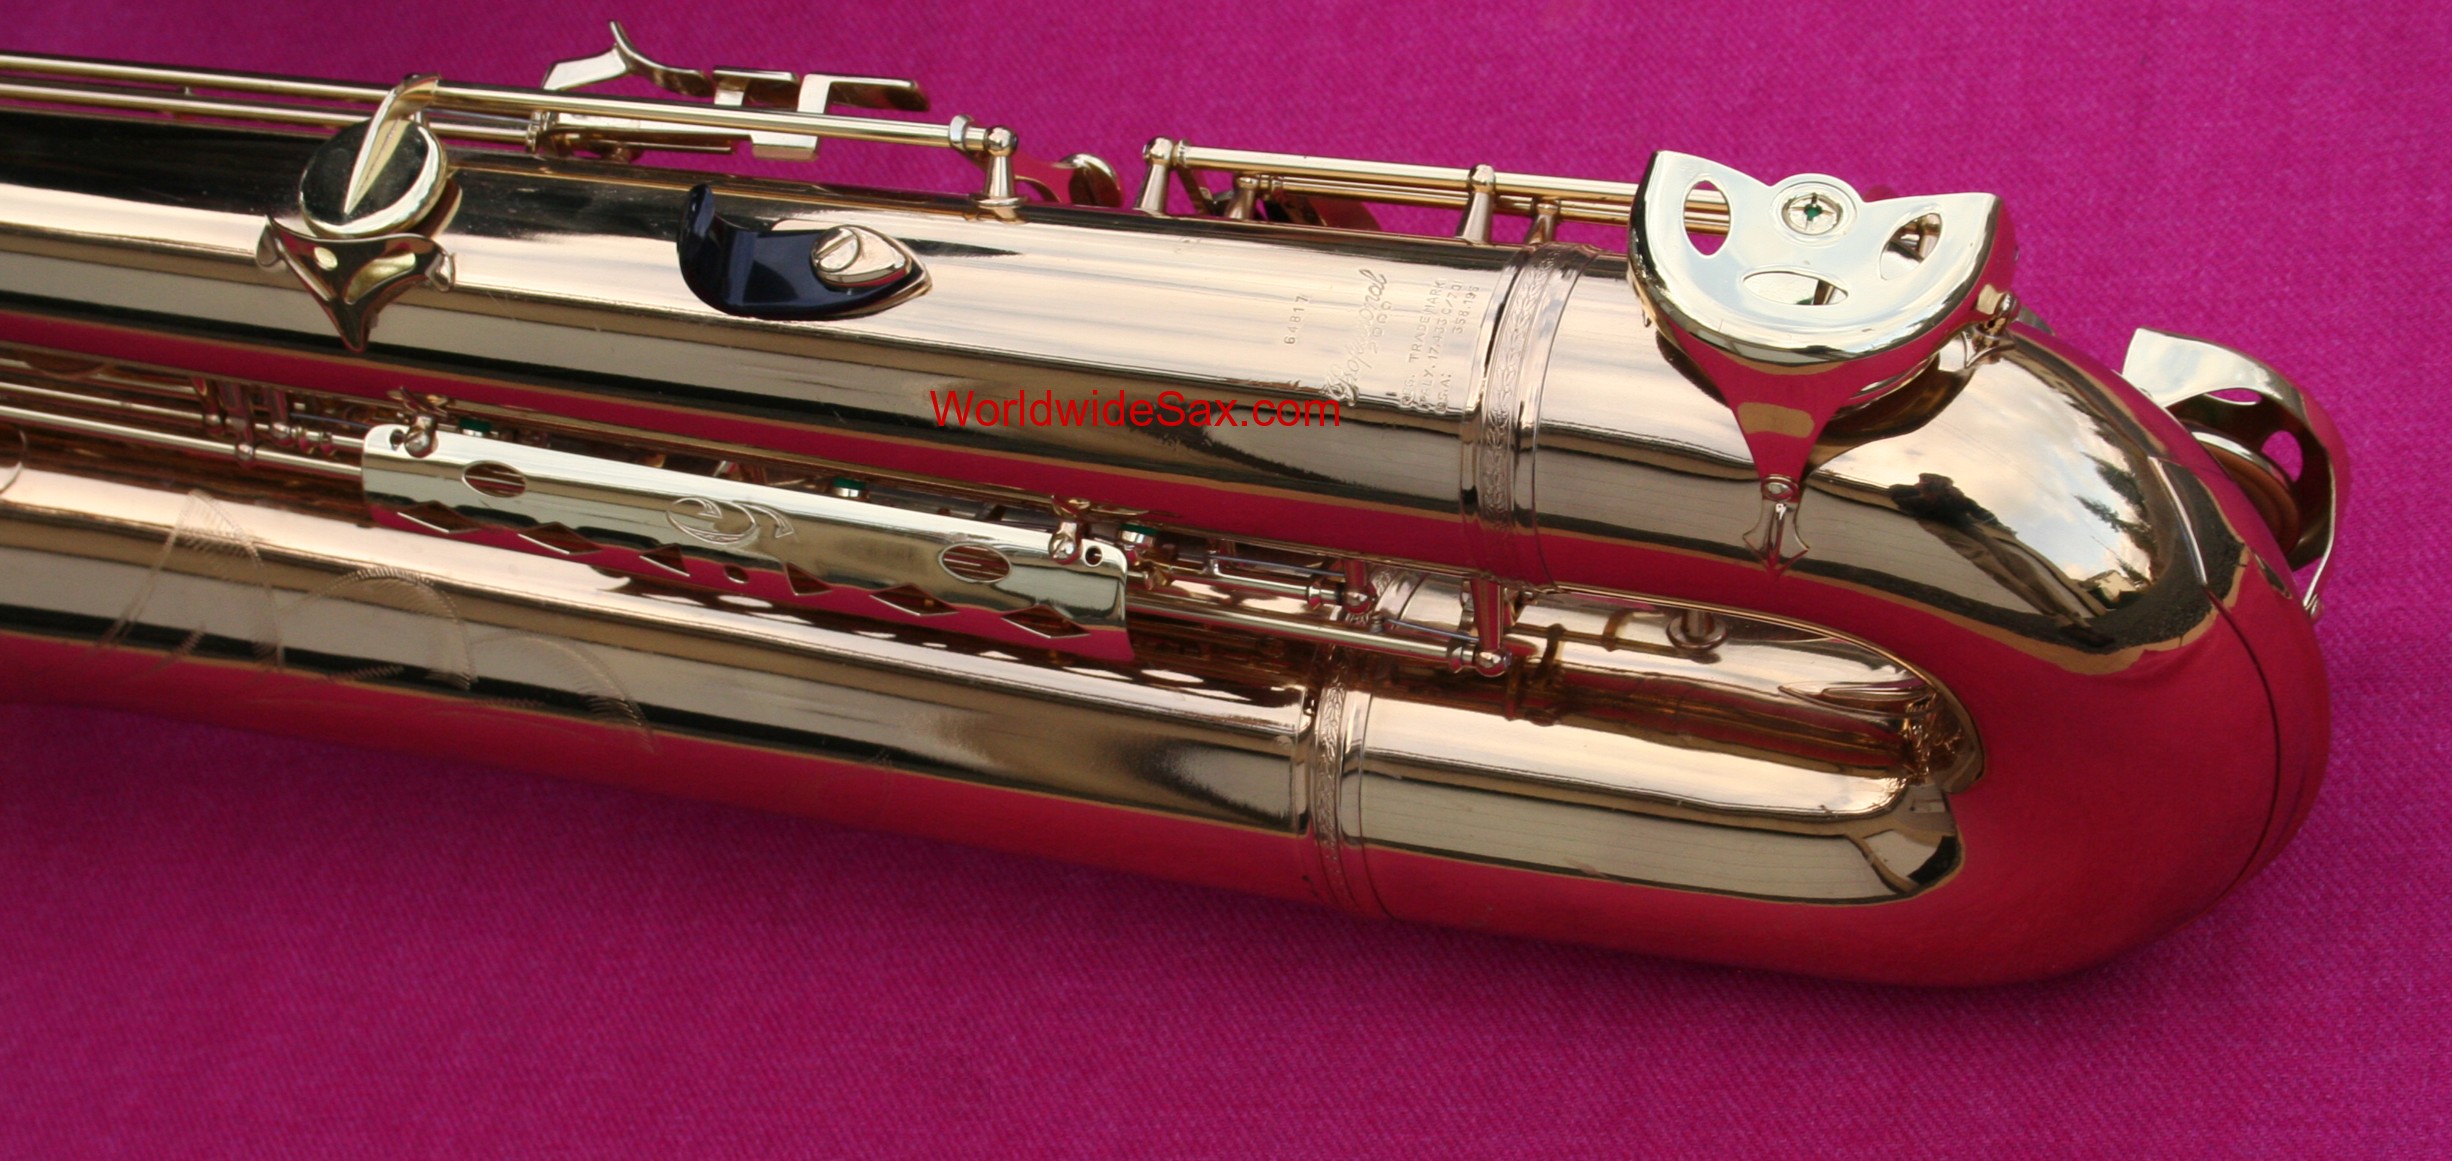 ida maria grassi saxophone serial numbers